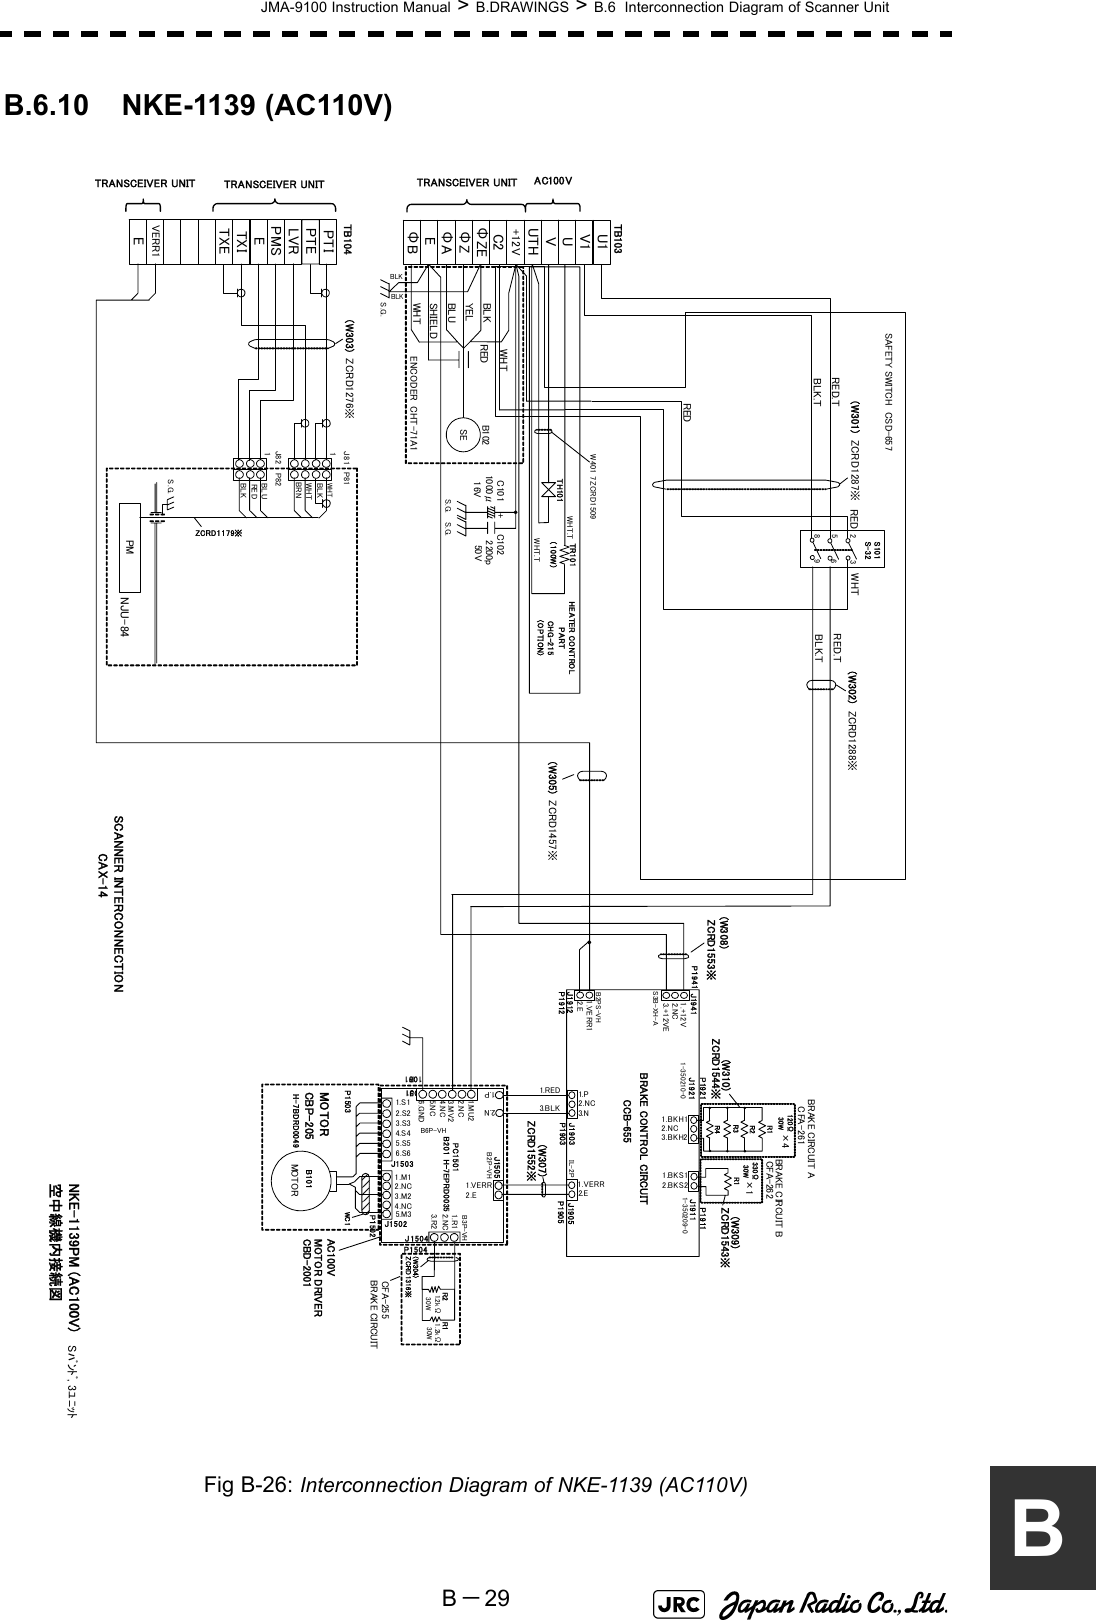 JMA-9100 Instruction Manual &gt; B.DRAWINGS &gt; B.6  Interconnection Diagram of Scanner UnitB－29BB.6.10 NKE-1139 (AC110V)Fig B-26: Interconnection Diagram of NKE-1139 (AC110V) NKE-1139PM (AC100V)空中線機内接続図SCANNER INTERCONNECTION CAX-14U1V1S101S-32239568RED.TBLK.T（W301) ZCRD1287※ RED WHTRED.TBLK.T（W302) ZCRD1288※SAFETY SWITCH CSD-657HEATER CONTROL PARTCHG-215(OPTION)TRANSCEIVER UNITWHT+12VC2ΦZEΦZΦAEΦBREDSHIELDYELBLUWHTSEB1 02ENCODER CHT-71A1C102C1012200p50V1000μ16V+BLKTB103BLKBLKAC100VUTHUVTH101TR101（100W）WHT.TTXITXEVERR1ELVRPMSETB104REDS.G.S.G.S.G.Sﾊﾞﾝﾄﾞ, 3ﾕﾆｯﾄ（W305) ZCRD1457※PTEPTIW401 7ZCRD1509WHT.TJ82J81 P81P82WHTBLKBLURE DBLKWHTBRN11PMNJU-84ZCRD1179※（W303) ZCRD1276※S.G.TRANSCEIVER UNIT TRANSCEIVER UNIT1.VERR12.E1.VERR2.E1.P2.NC3.N 1.BKH13.BKH21.BKS12.BKS21.+12V2.NC3.+12VEP1941 J1941J1903P1903J1905P1905J1912P1912BRAKE CONTROL CIRCUITCCB-655J1921P1921J1911P19111.RED3.BLKIL-2PB2PS-VHS3B-XH-A1-350210-0 1-350209-0ZCRD1553※ZCRD1552※(W307)ZCRD1543※(W309)ZCRD1544※(W310)CBD-2001(W304)ZCRD 1316※BRAKE CIRCUITCFA-255R1R21.2kΩ30W1.2kΩ30WP1504J15011.R13.R2H-7EPRD0035B201J1504J1505PC1501P1501B3P-VH2.NCB2P-VH1.P2.NP1502AC100VWC 1CBP-205H-7BDRD00492.NC4.NC1.S12.S23.S34.S45.S56.S6J1502J15033.M21.M15.M3P1503MOTORMOTO RB101(W308)MOTOR DRIVERBRA KE C IRCUIT BCFA-262BRAKE CIRCUIT ACFA-261R1R2R3R4R1120Ω30W330Ω30W×4×12.NC3.MV21.MU22.NC4.NC5.NC6.GNDB6P-VH1.VERR2.E